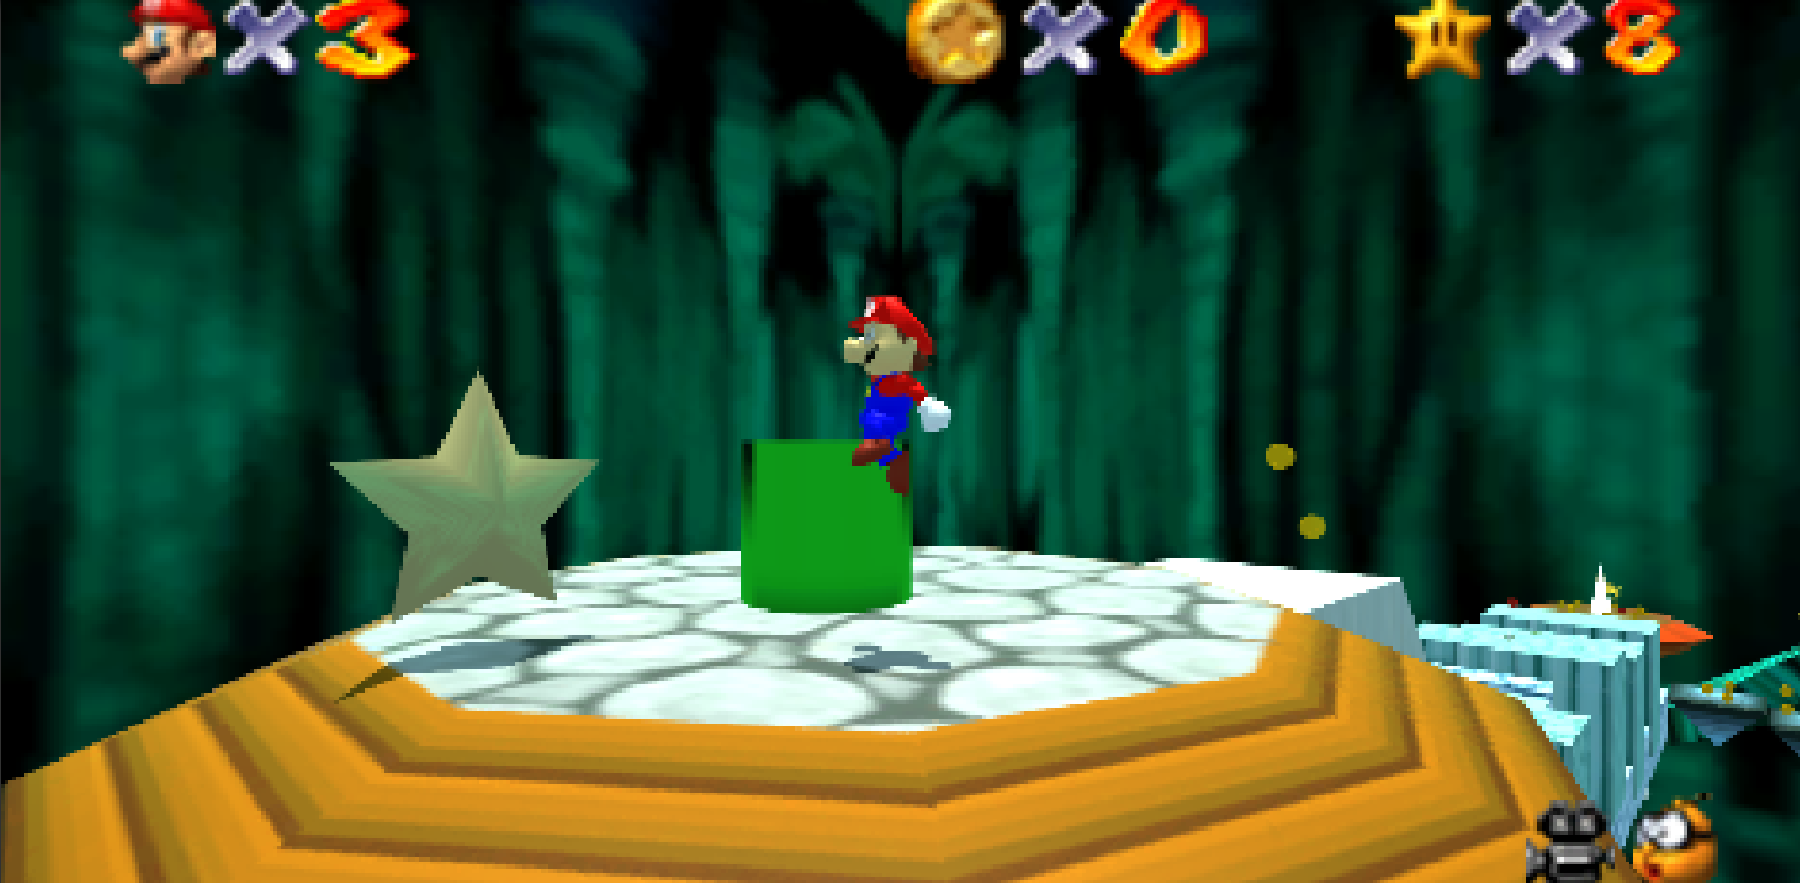 Unblocked Games - Super Mario 64